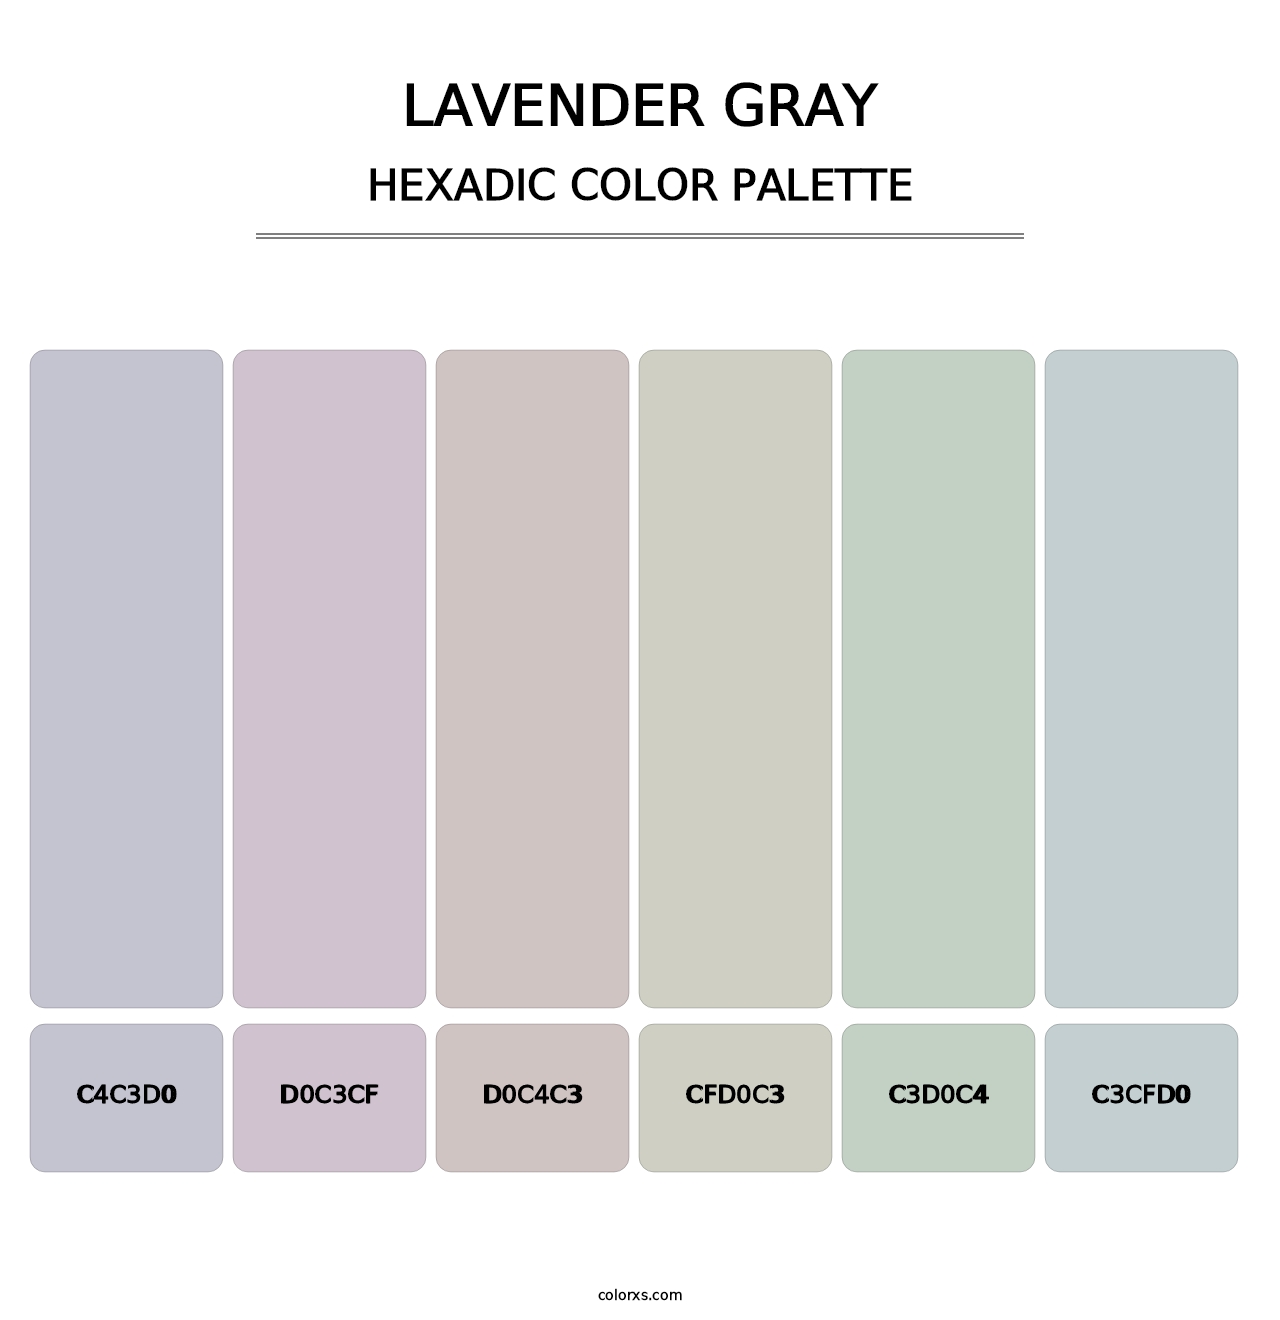 Lavender Gray - Hexadic Color Palette